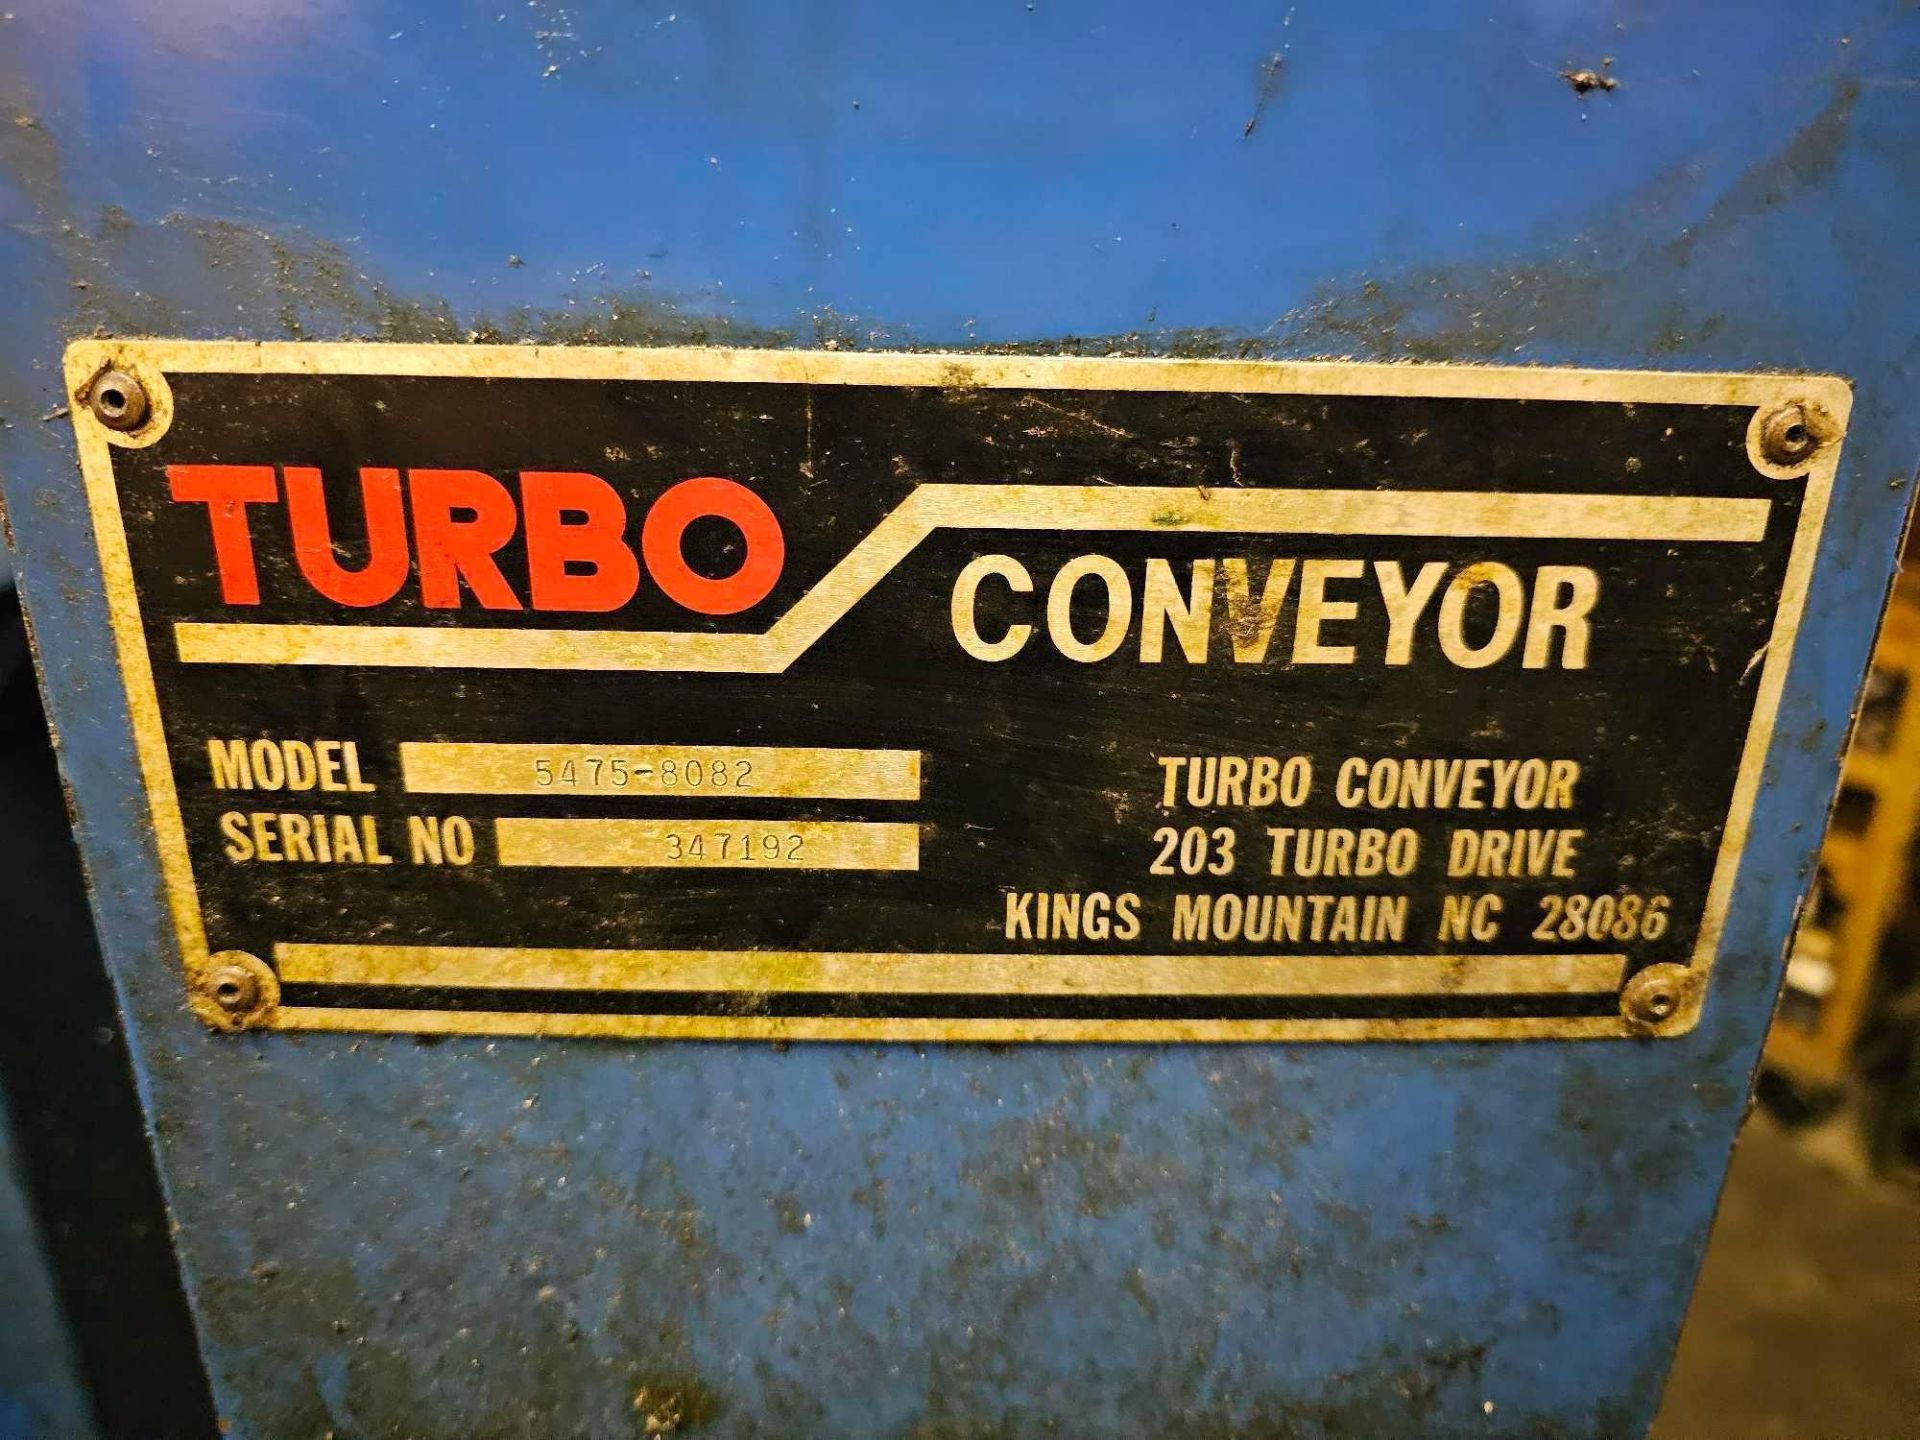 1998 DAEWOO LYNX 200 CNC TURNING CENTER (NO TOOLING) WITH TURBO CONVEYOR - Image 12 of 17